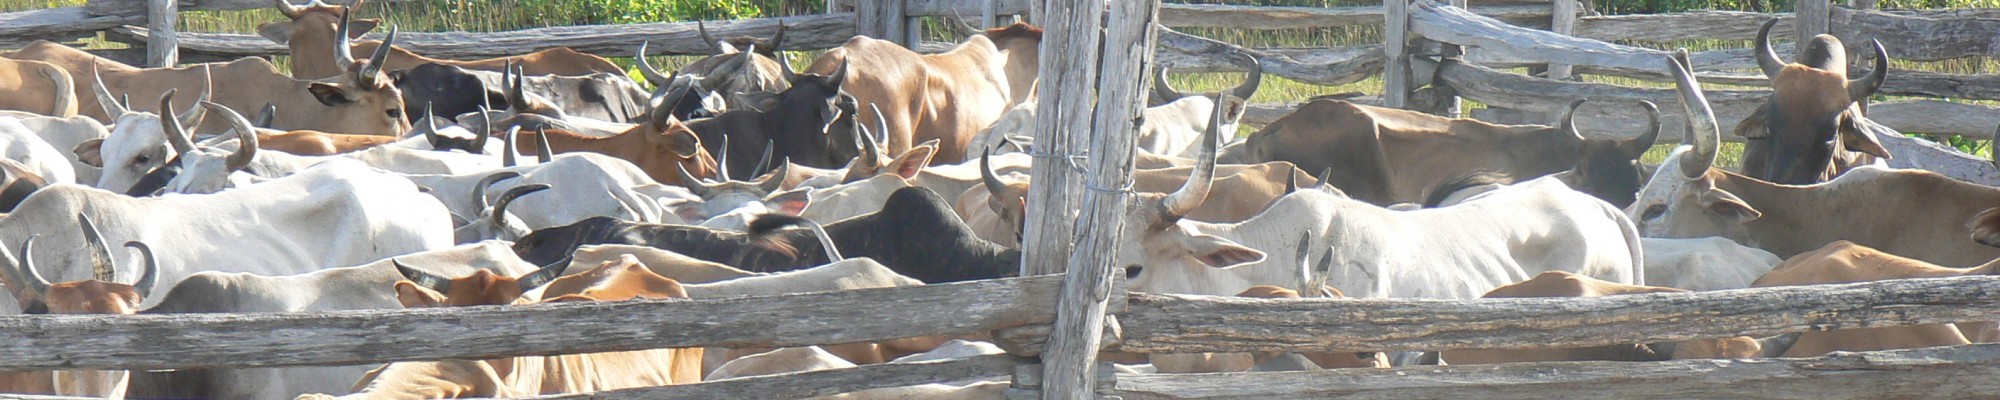 Guyana - Cattle